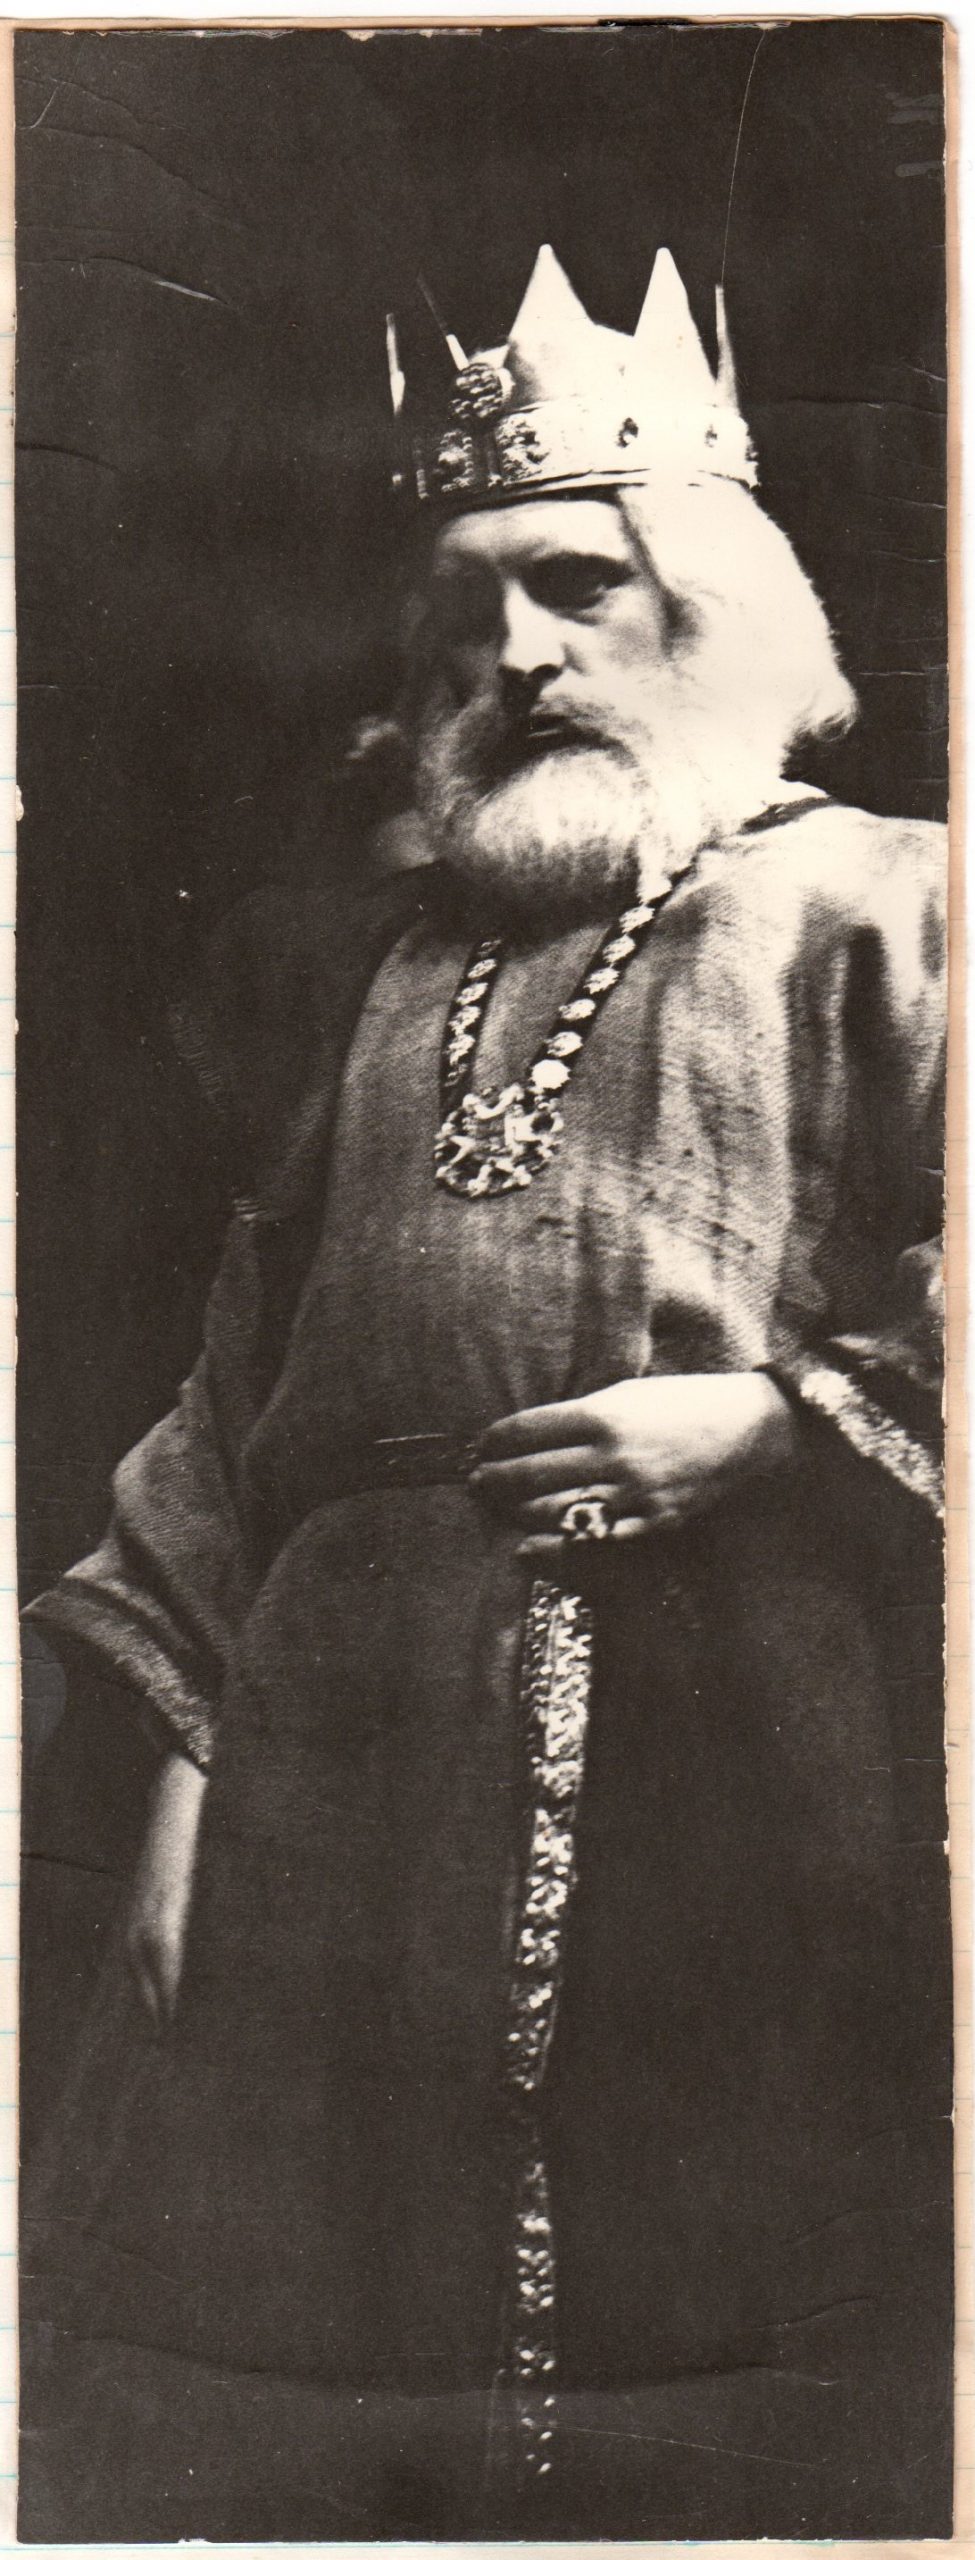 David Goddard as King Duncan in Macbeth 1970 Marian Street Theatre